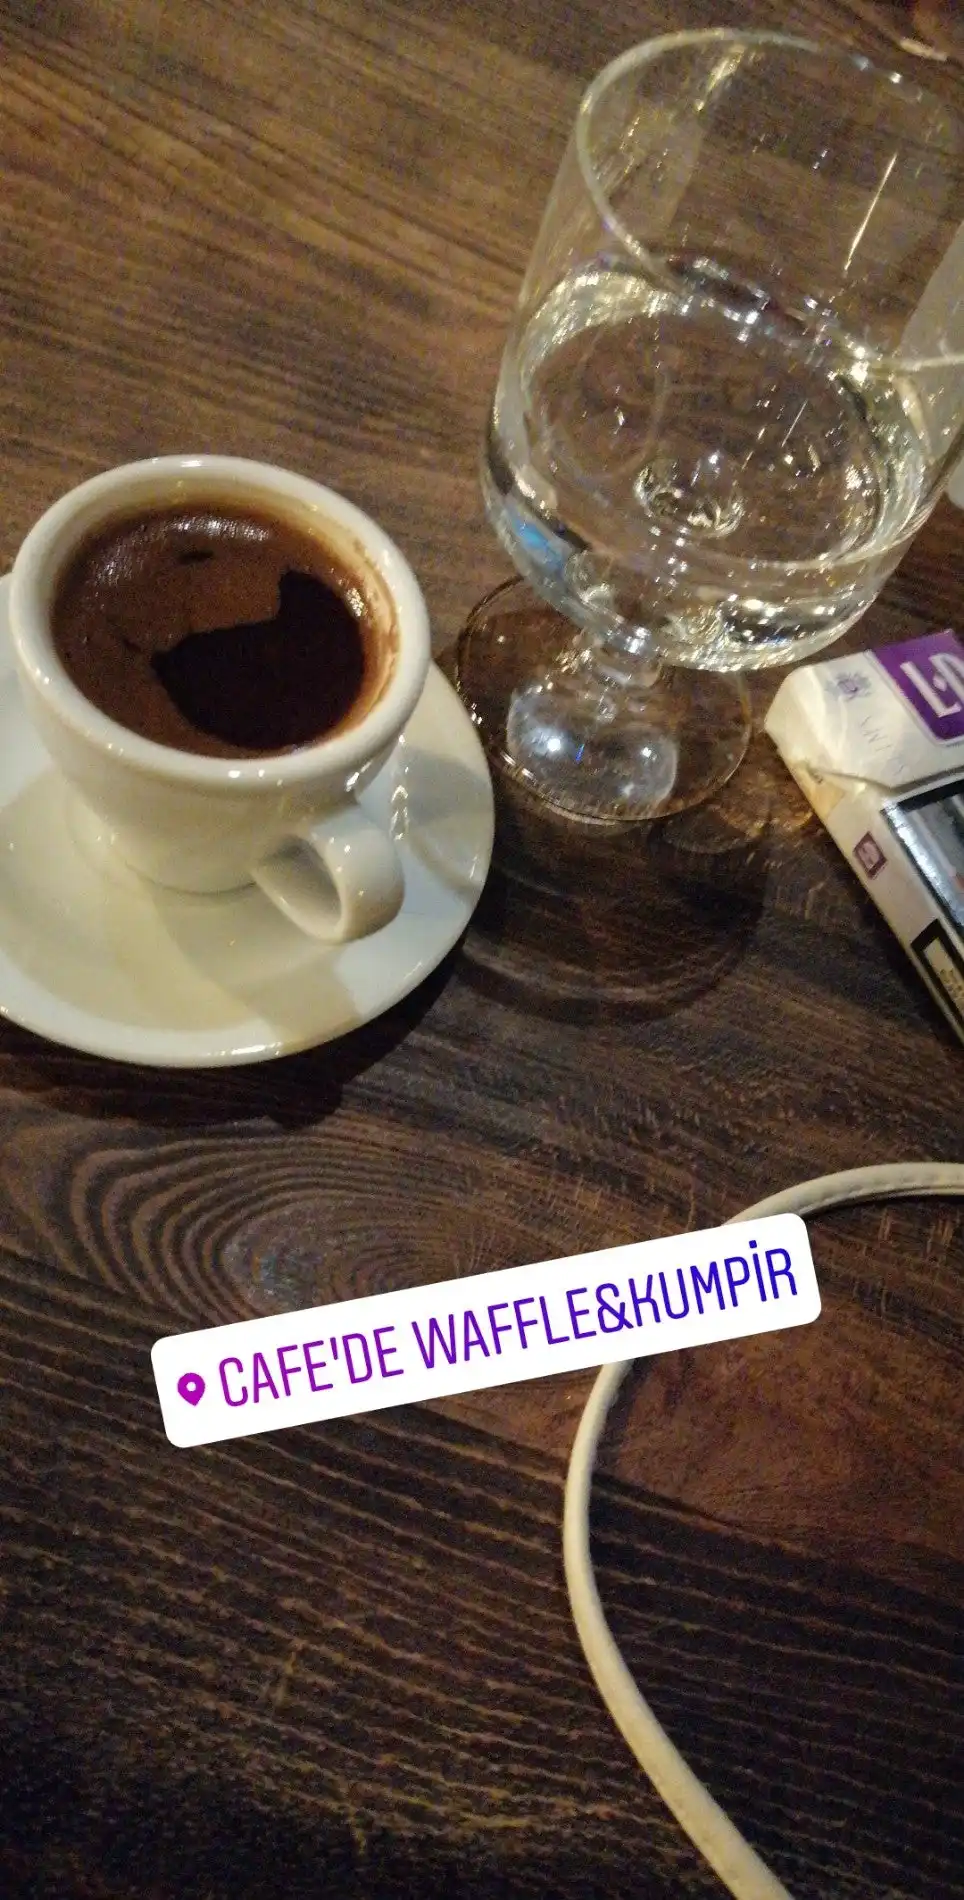 Cafe'de Waffle&Kumpir